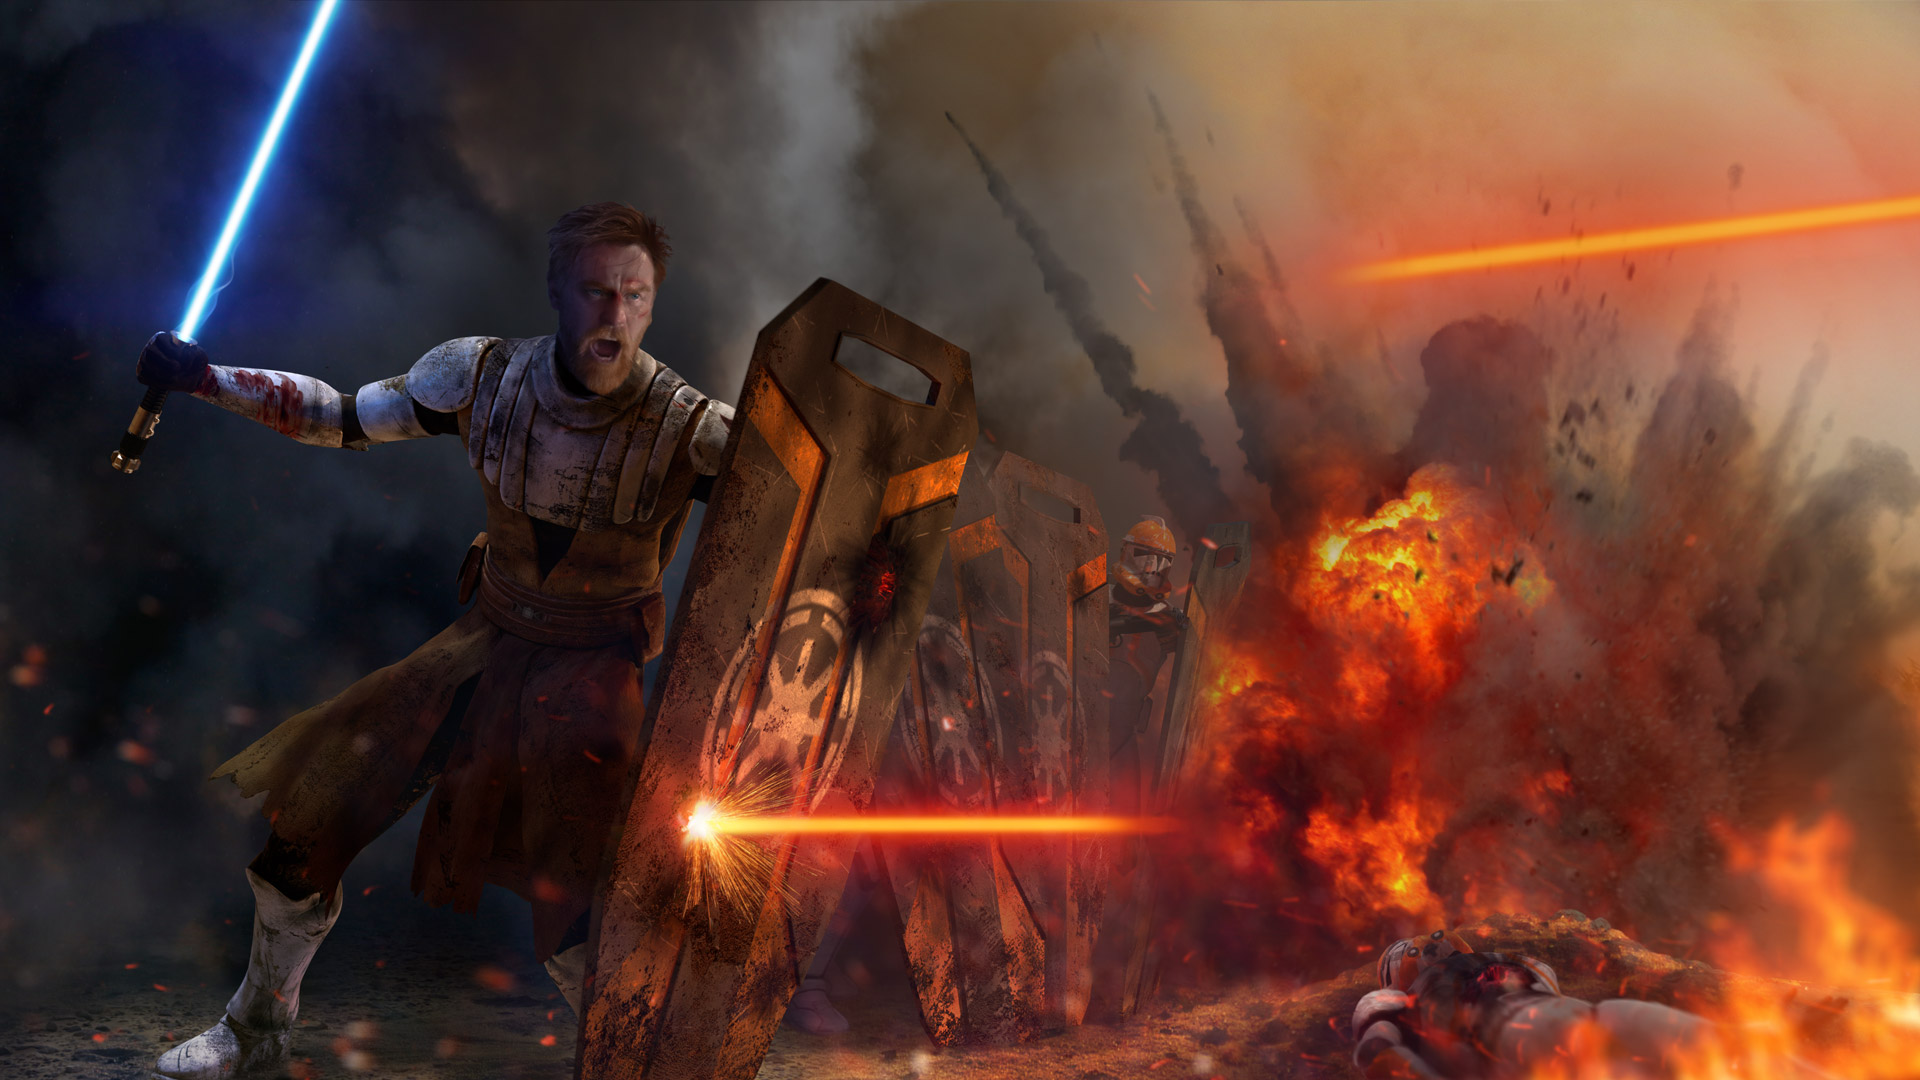 Obi Wan Kenobi Artwork, HD Movies, 4k Wallpaper, Image, Background, Photo and Picture